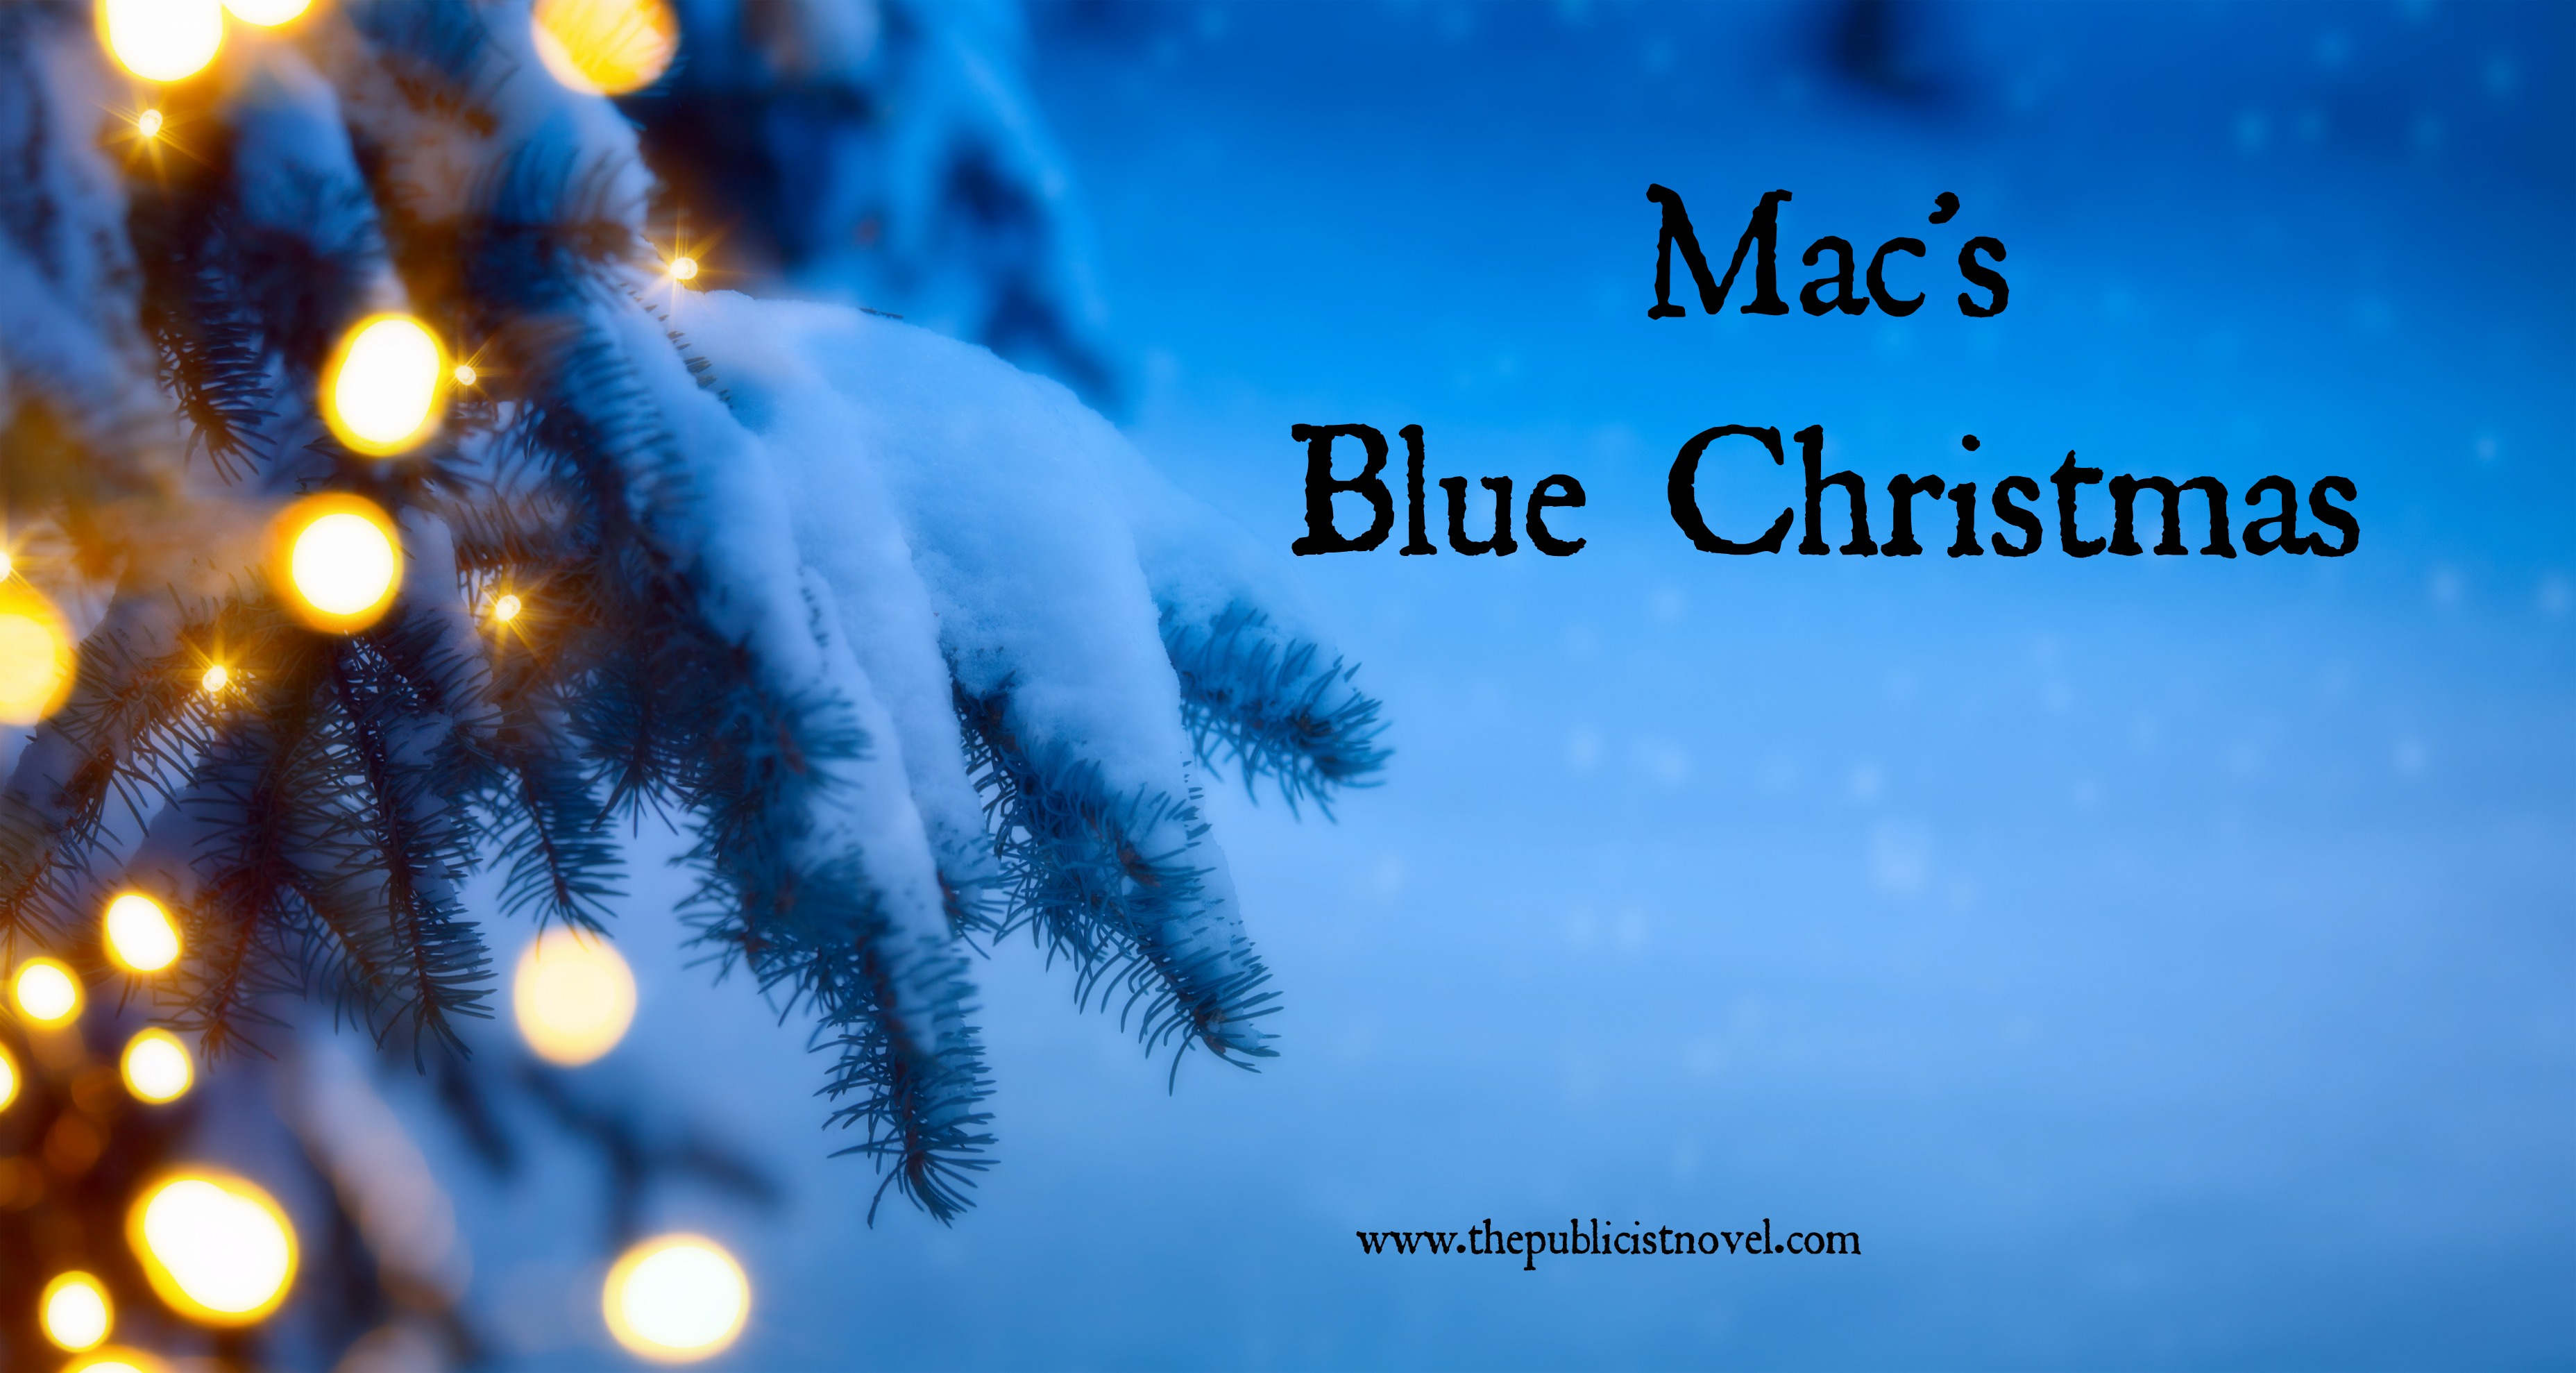 Mac’s Blue Christmas